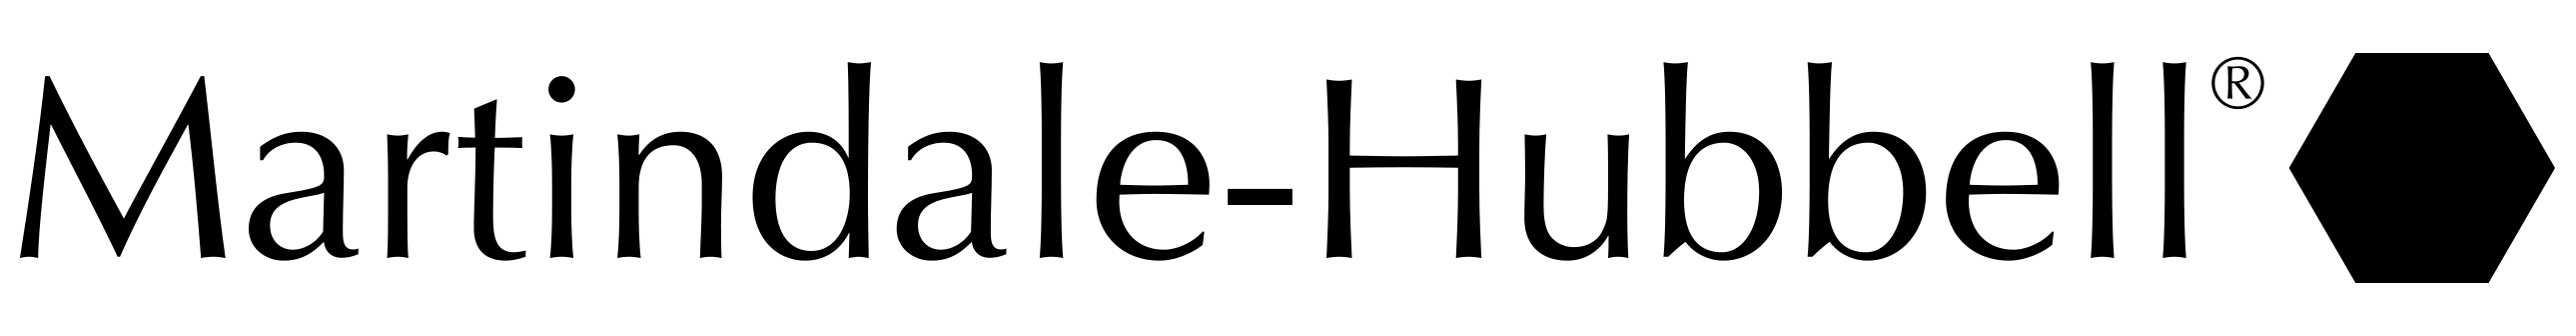 martindale logo